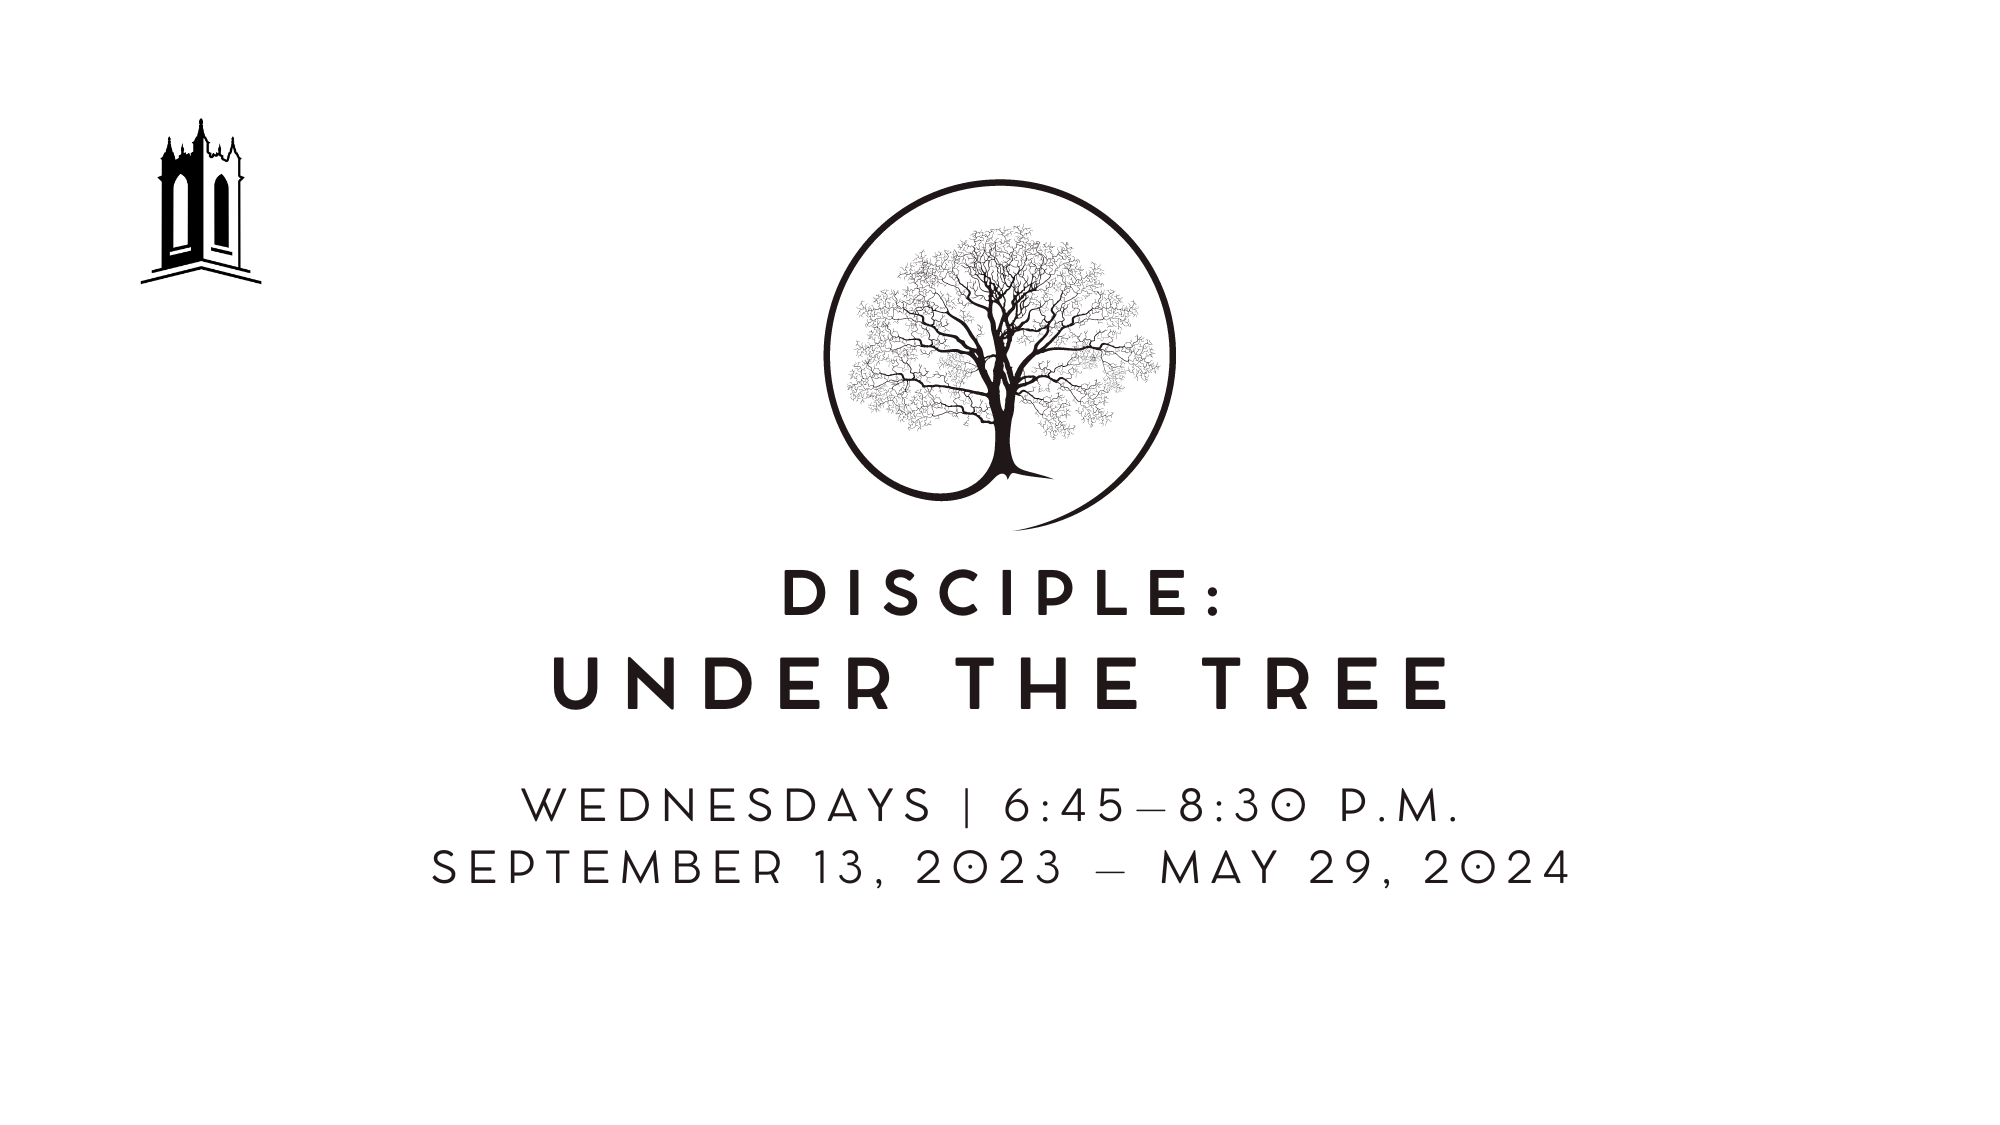 Disciple: Under the Tree